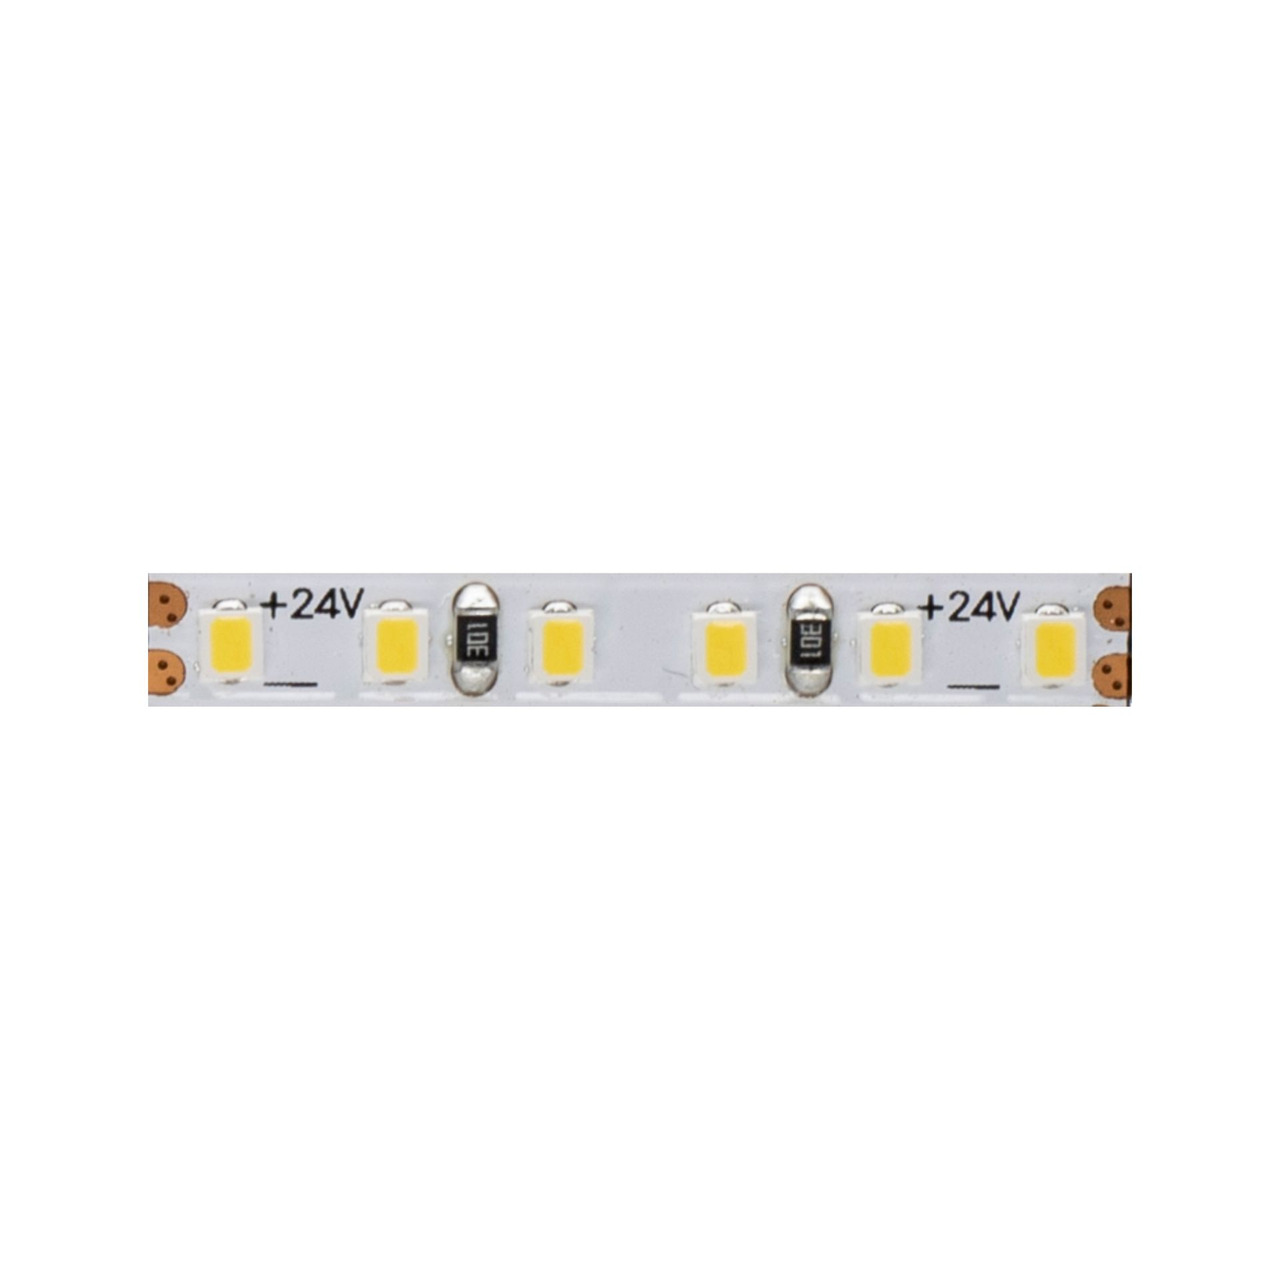 Beneito 5-m-LED-Streifen FINE-49- 50 W- 24 V DC- 3000 K- 90 Ra- 10 W-m- 740 lm-m- 204 LEDs-m- IP20 unter Beleuchtung